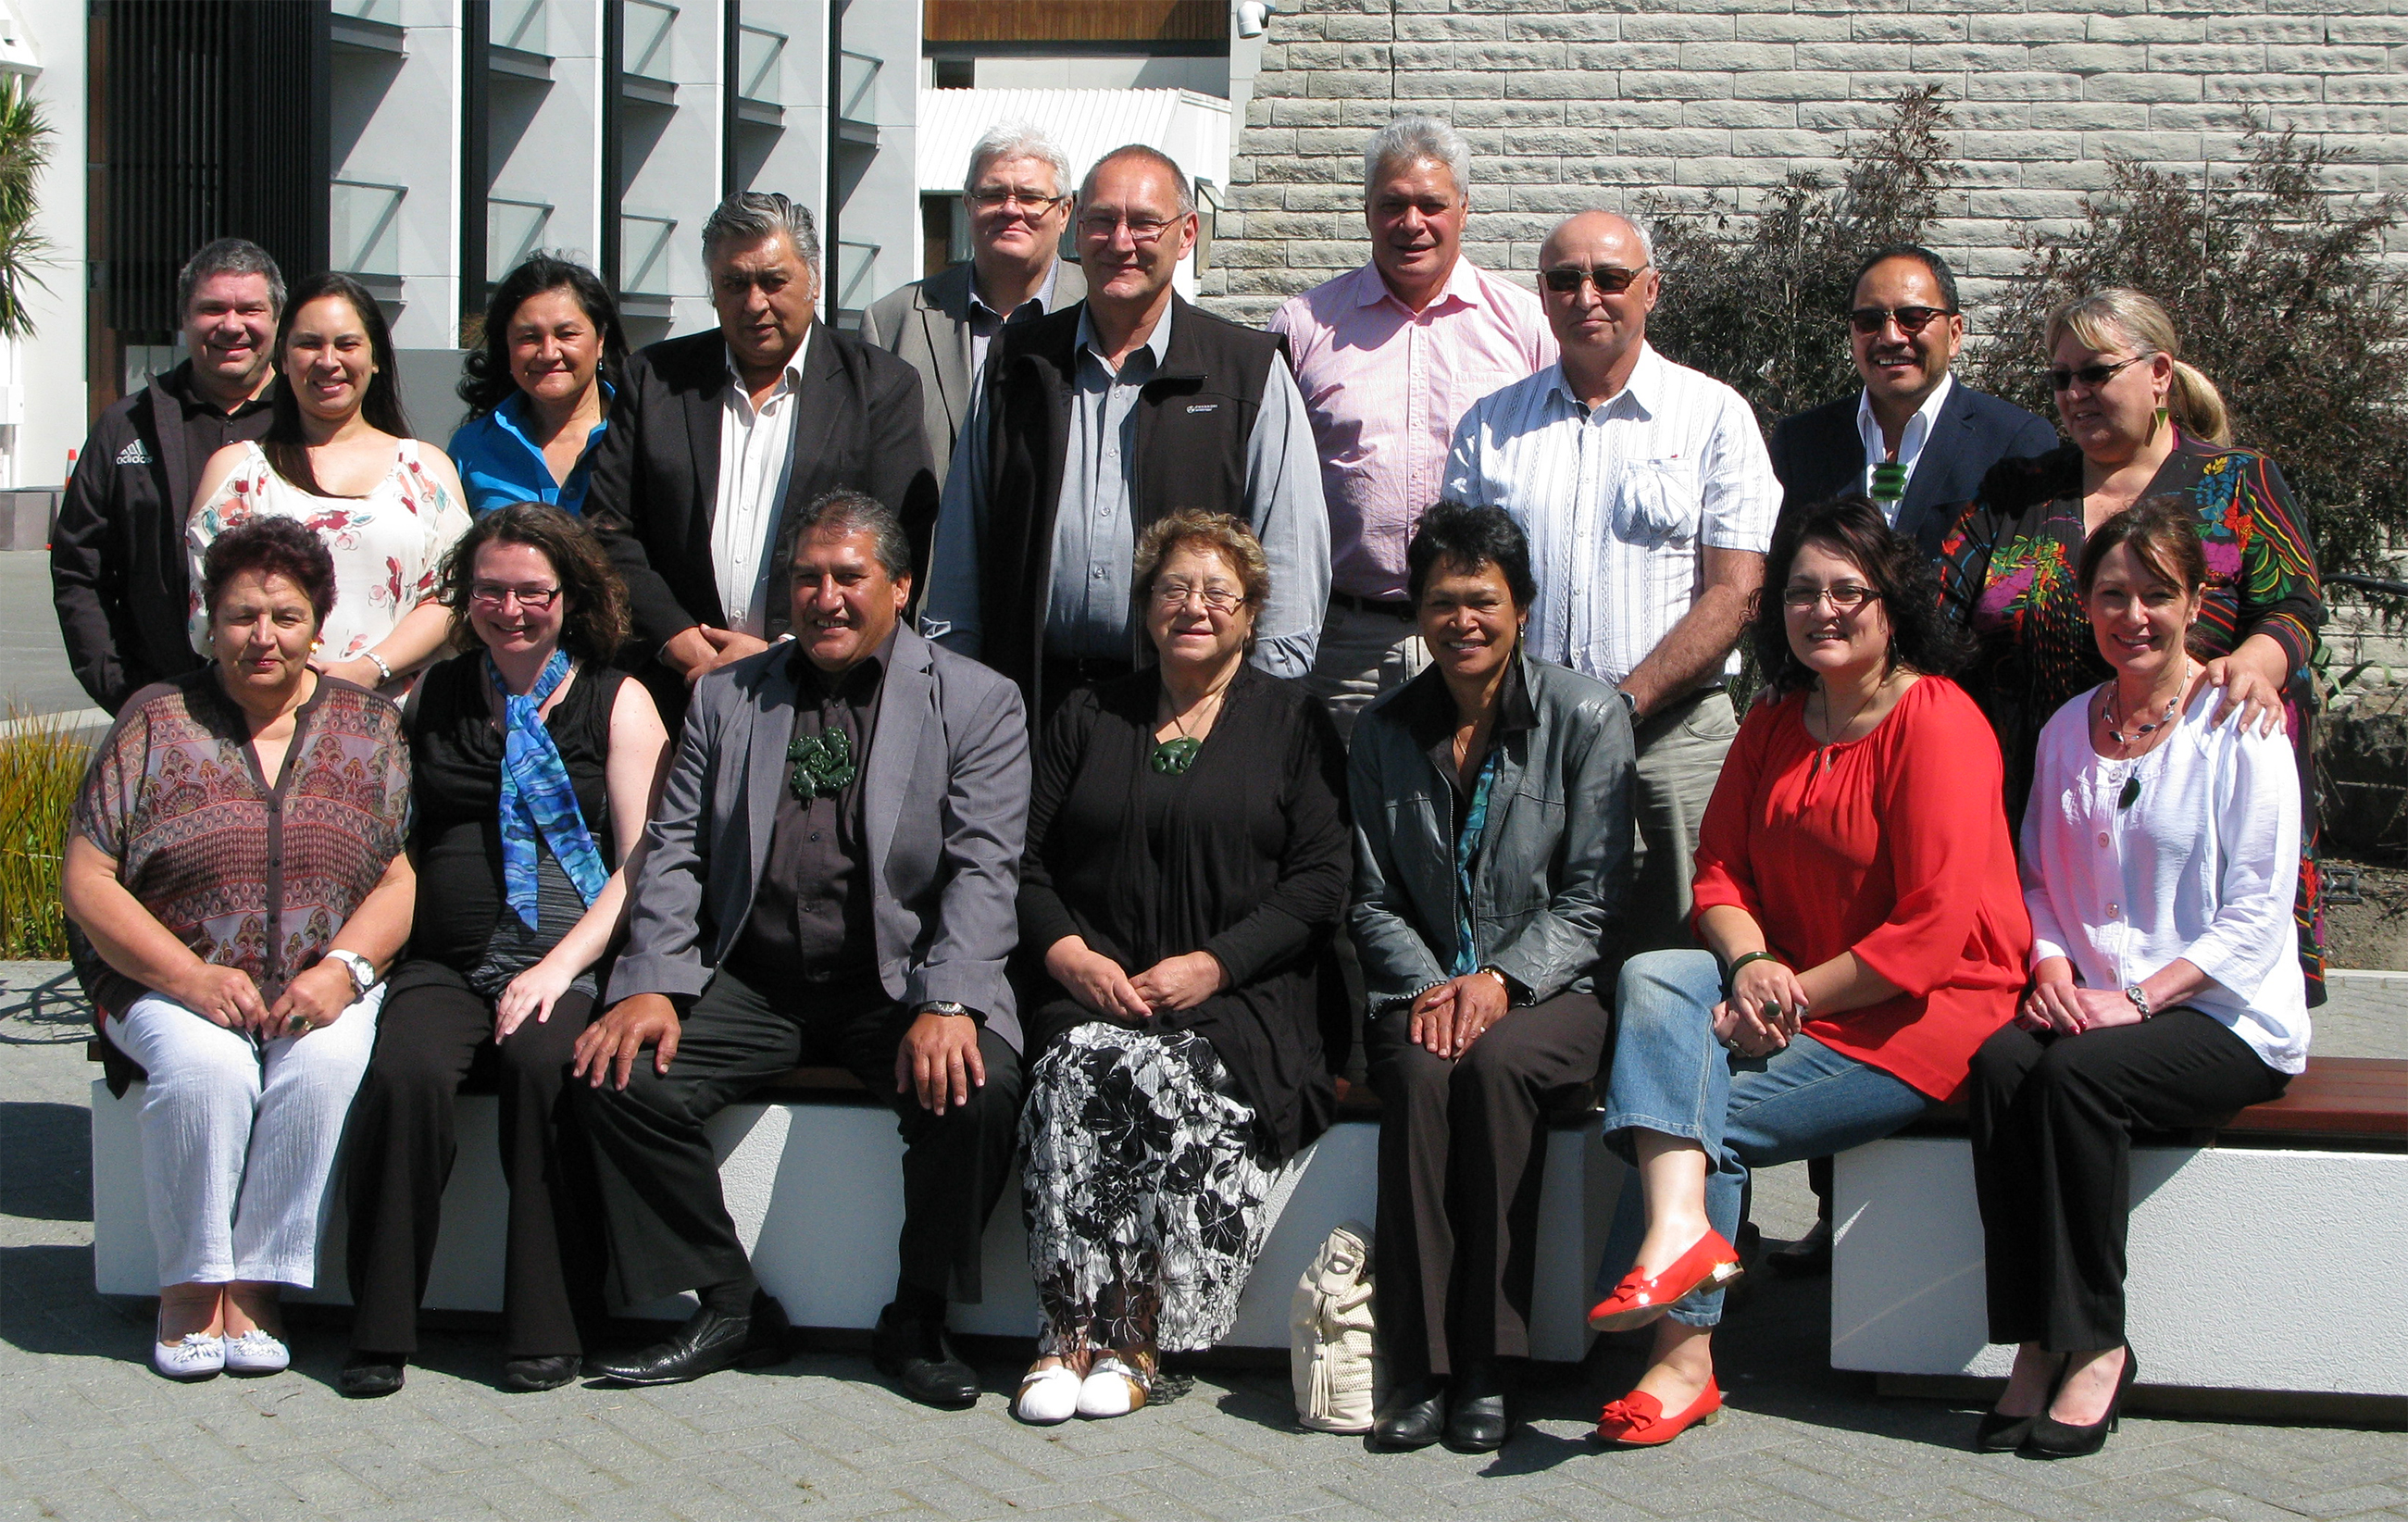 Te Apārangi (Te Rūnanga o Ngāi Tahu committee) met with Ngāti Kahungunu in October last year to discuss the Ruataniwha Dam proposal. Tā Mark Solomon subsequently attended some of the hearings on the dam.